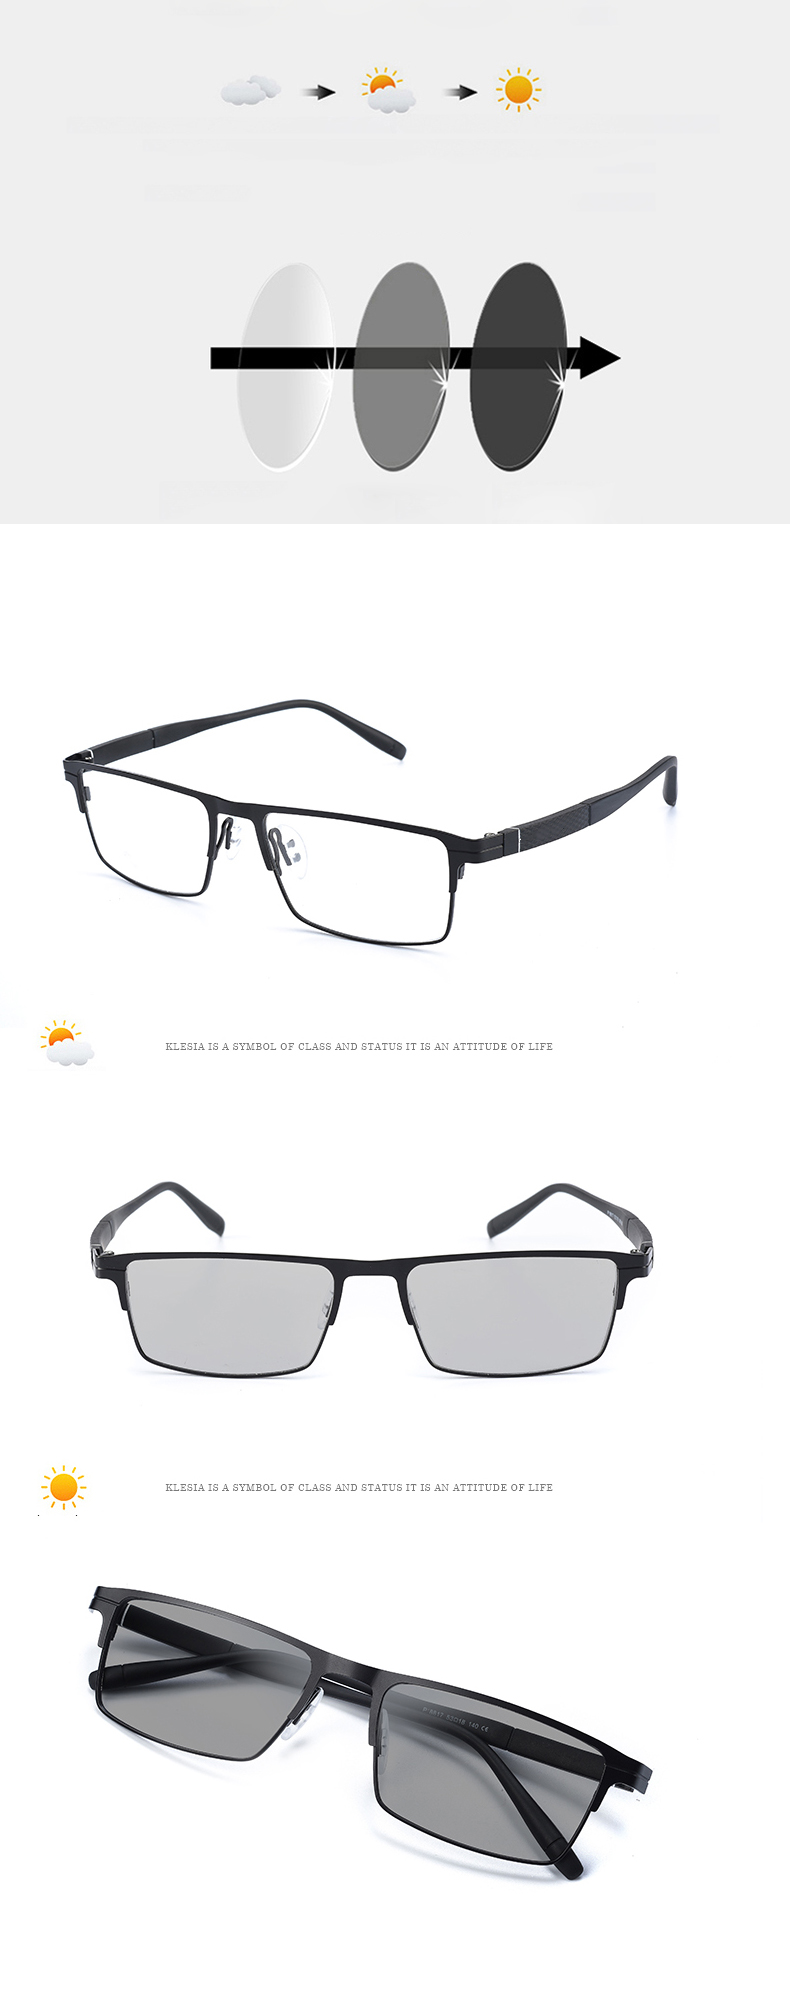 KCASA Outdoor Sun-resistant Progressive Multifocal Reading Glasses